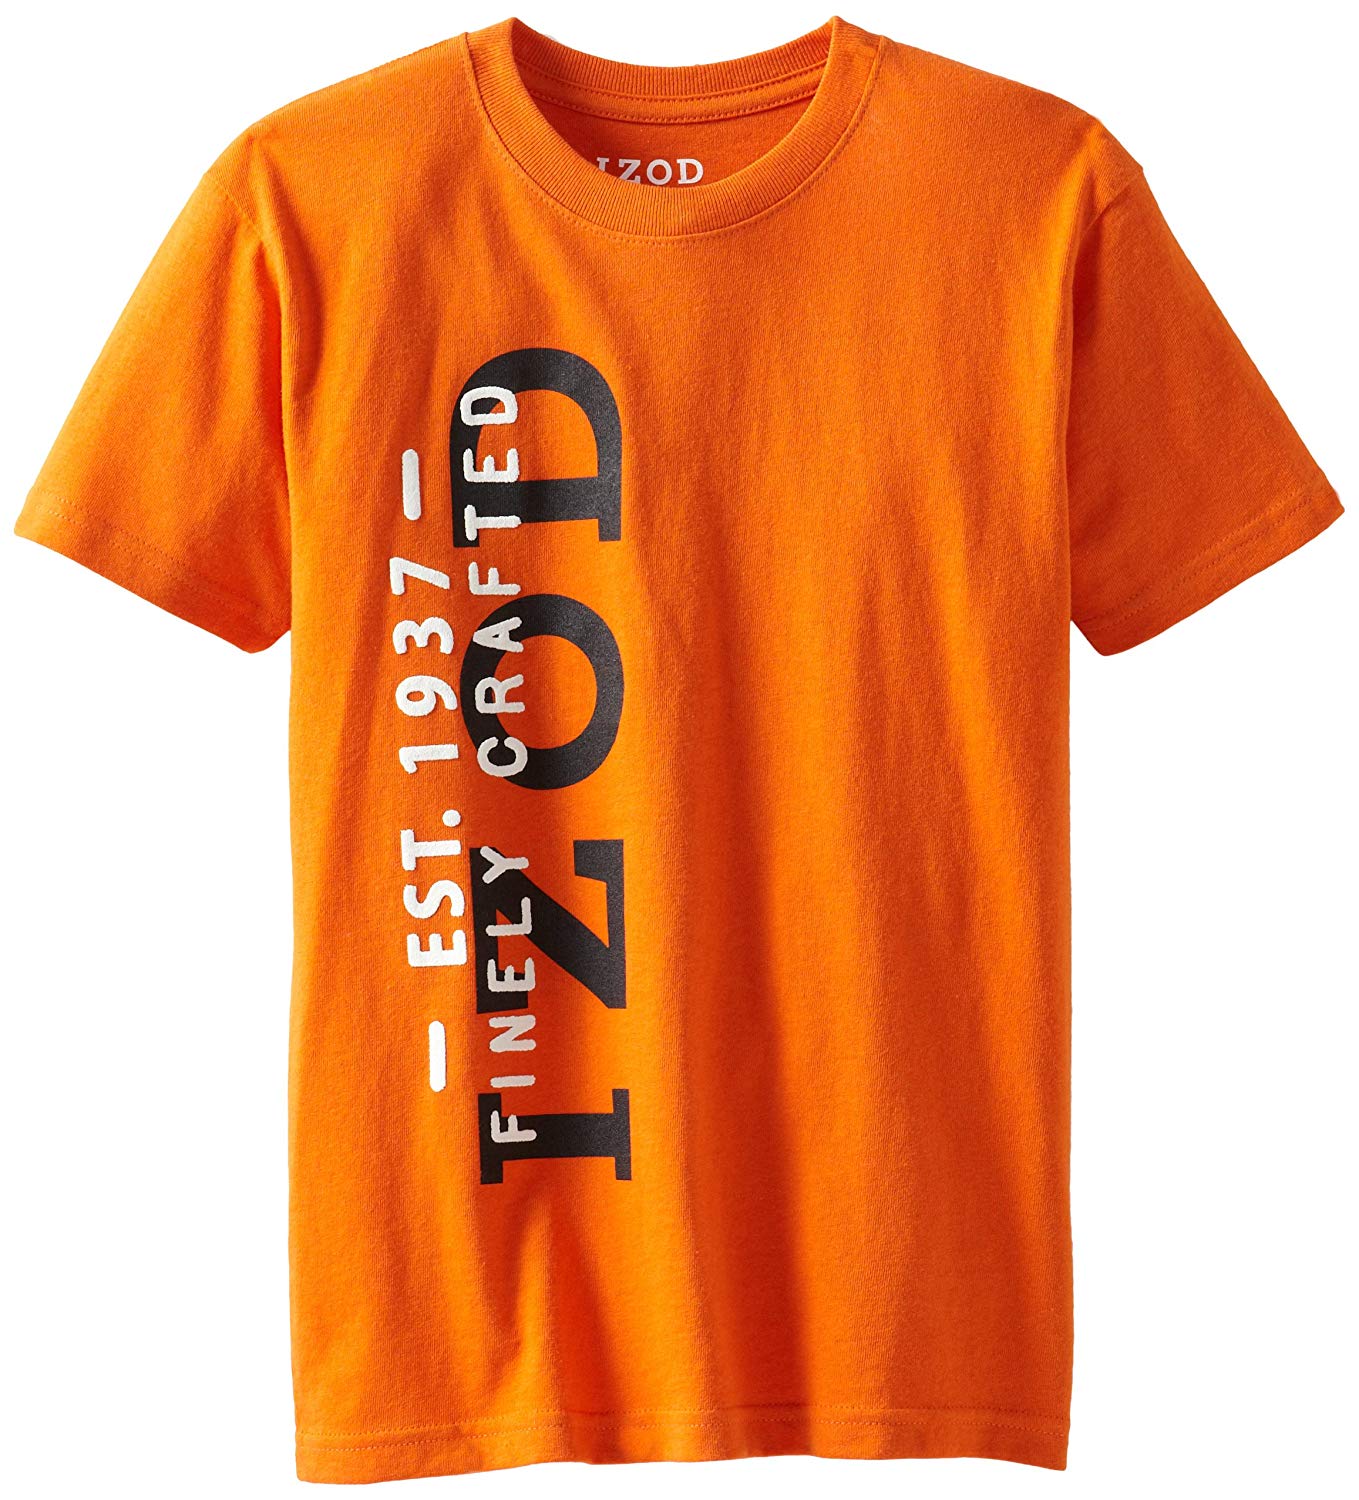 Izod Shirt Logo - Amazon.com: IZOD Big Boys' Logo Vertical Tee, Clementine, Medium (10 ...